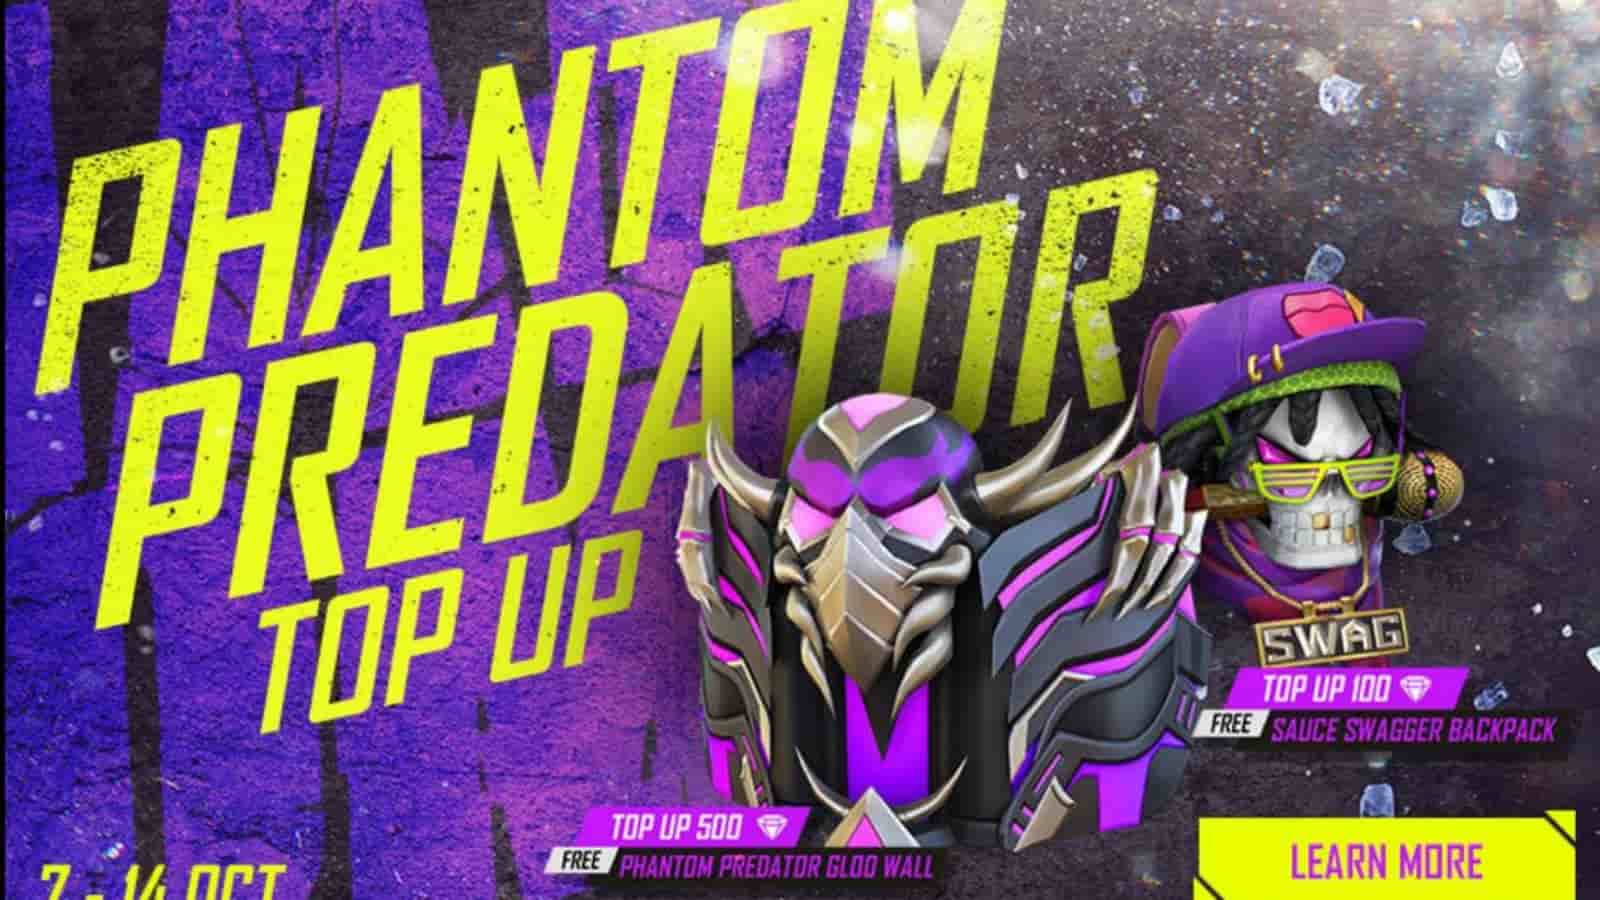 You are currently viewing Phantom Predator Topup Event:Get Sauce Swagger Backpack-Phantam Predator Glue Wall